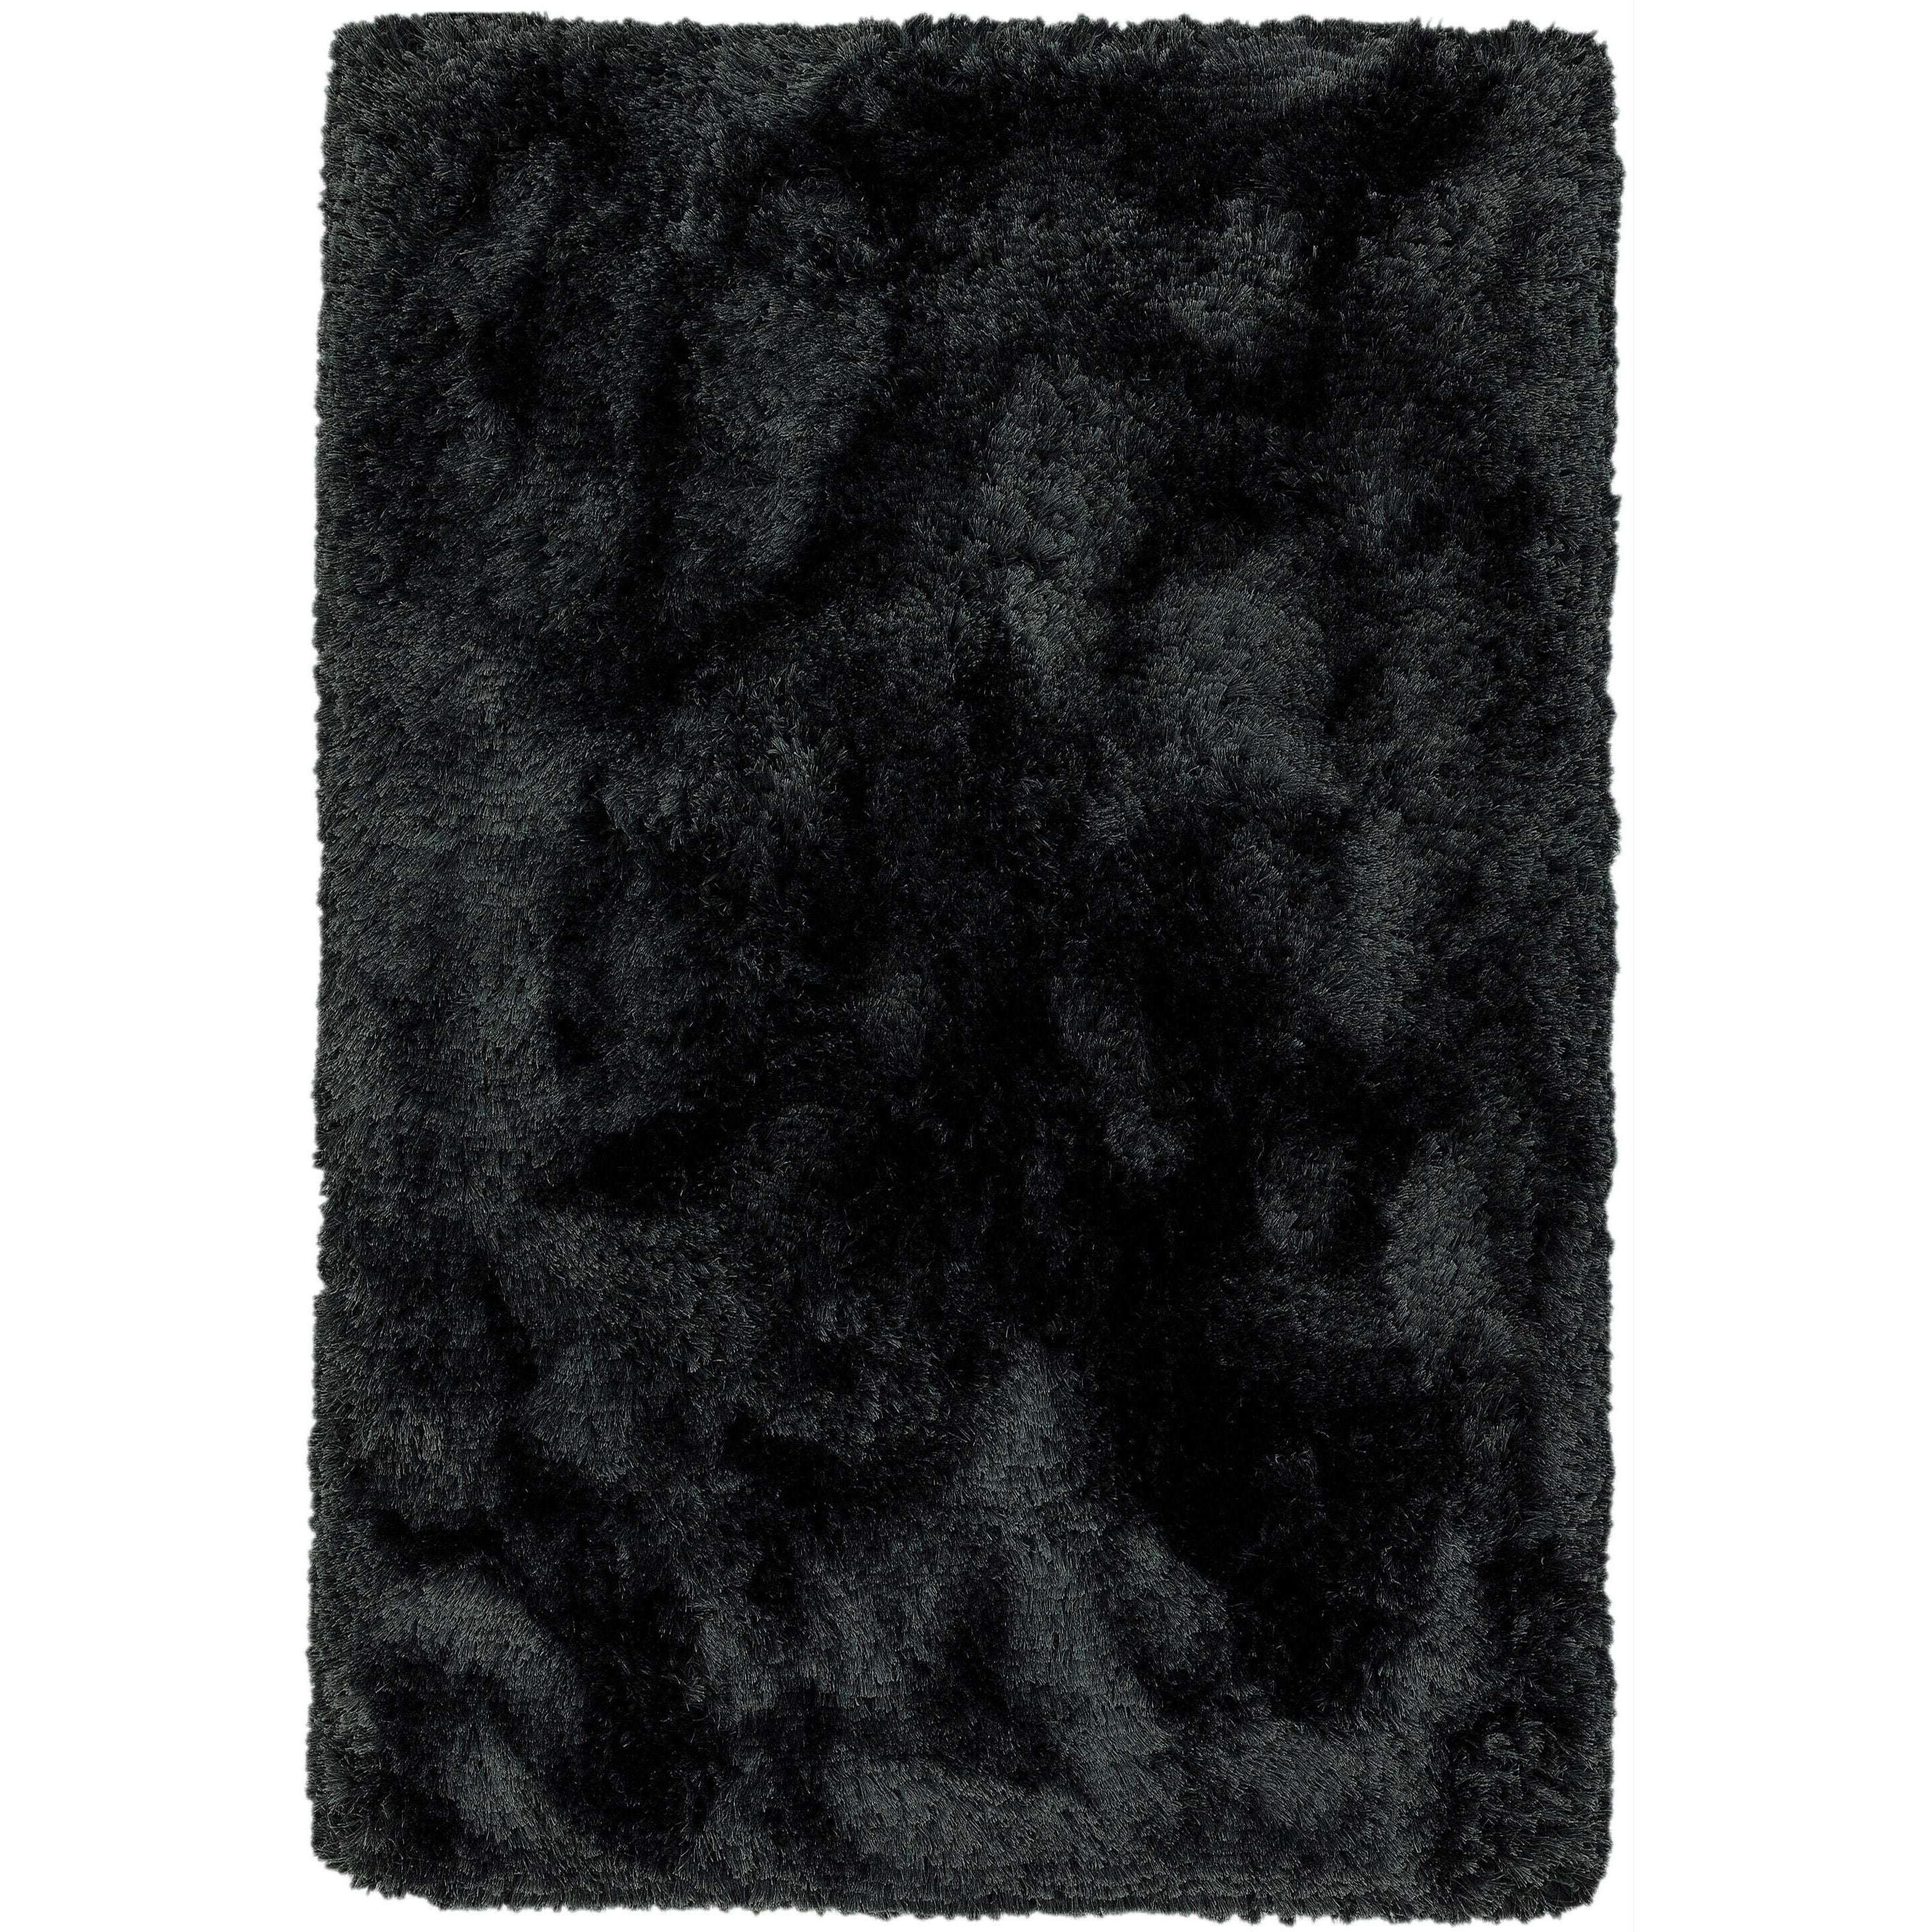 Asiatic Carpets Plush Hand Woven Rug Black - 140 x 200cm - image 1